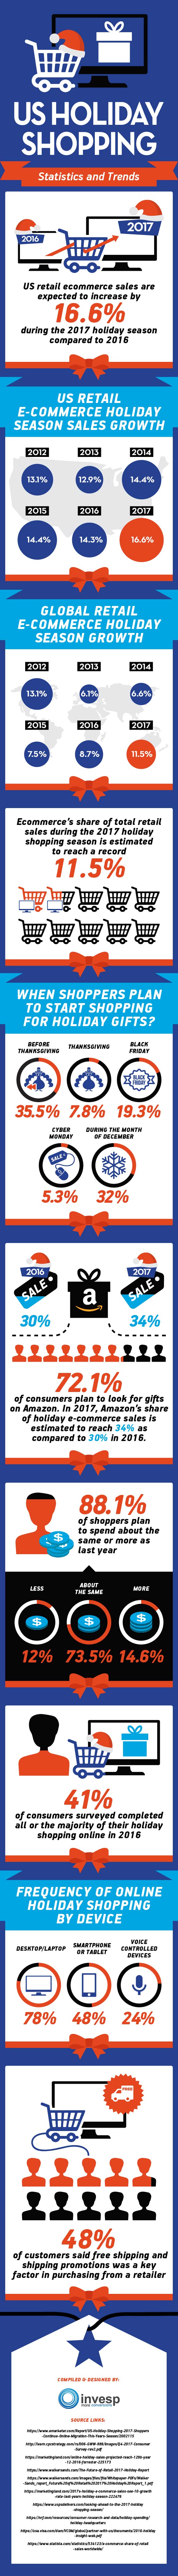 Holiday Shopping Statistics and Trends Infographic 2017 - Digital Marketing - eCommerce - Kate Vega